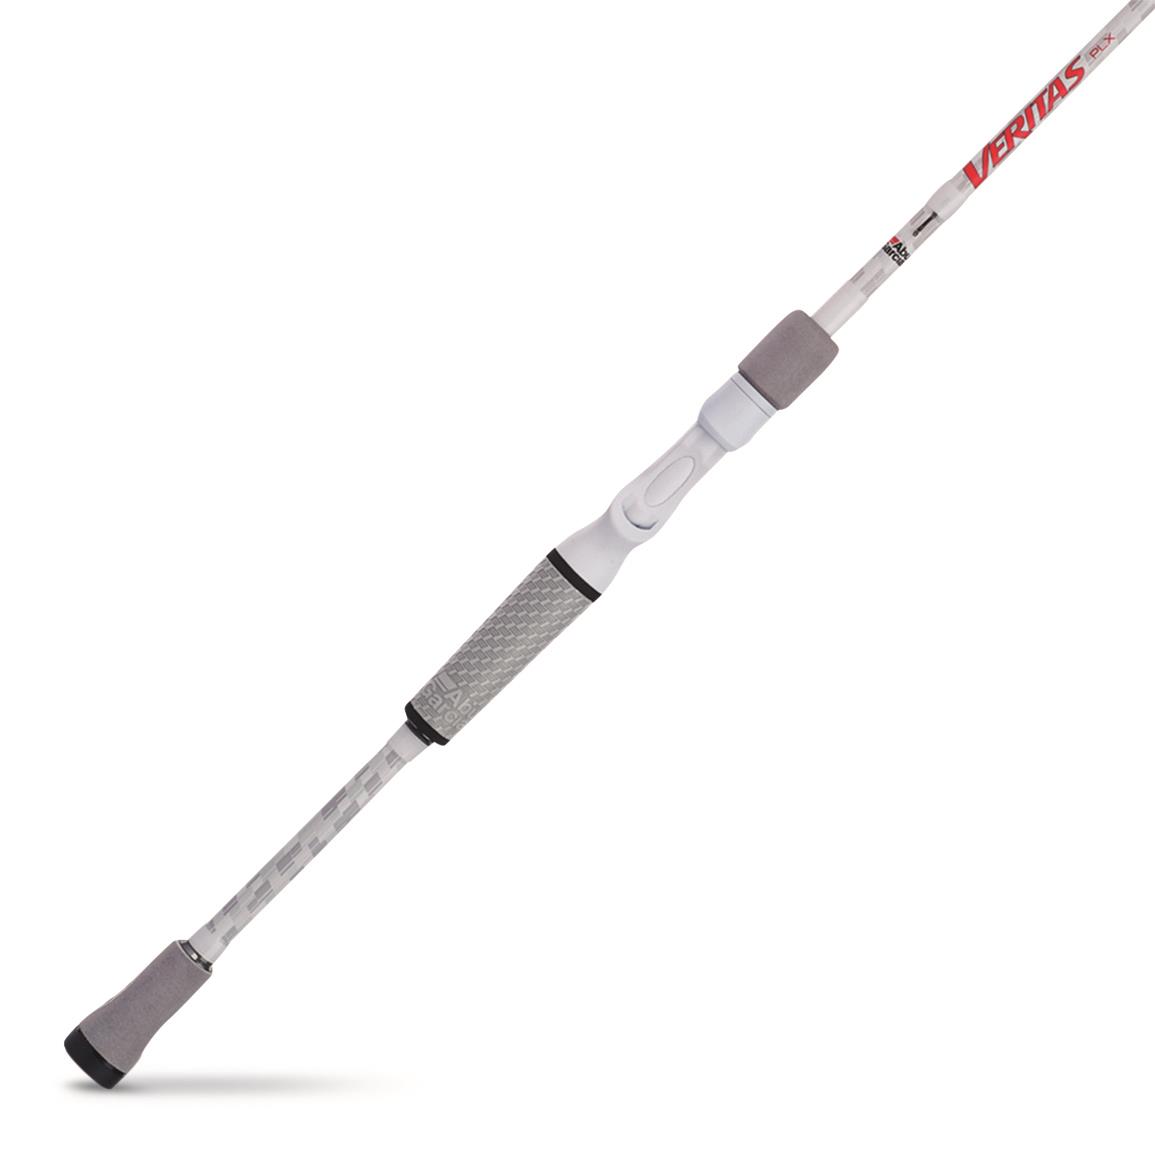 Abu Garcia Veritas LTD Casting Rod, 7' Length, Medium Power, Fast Action